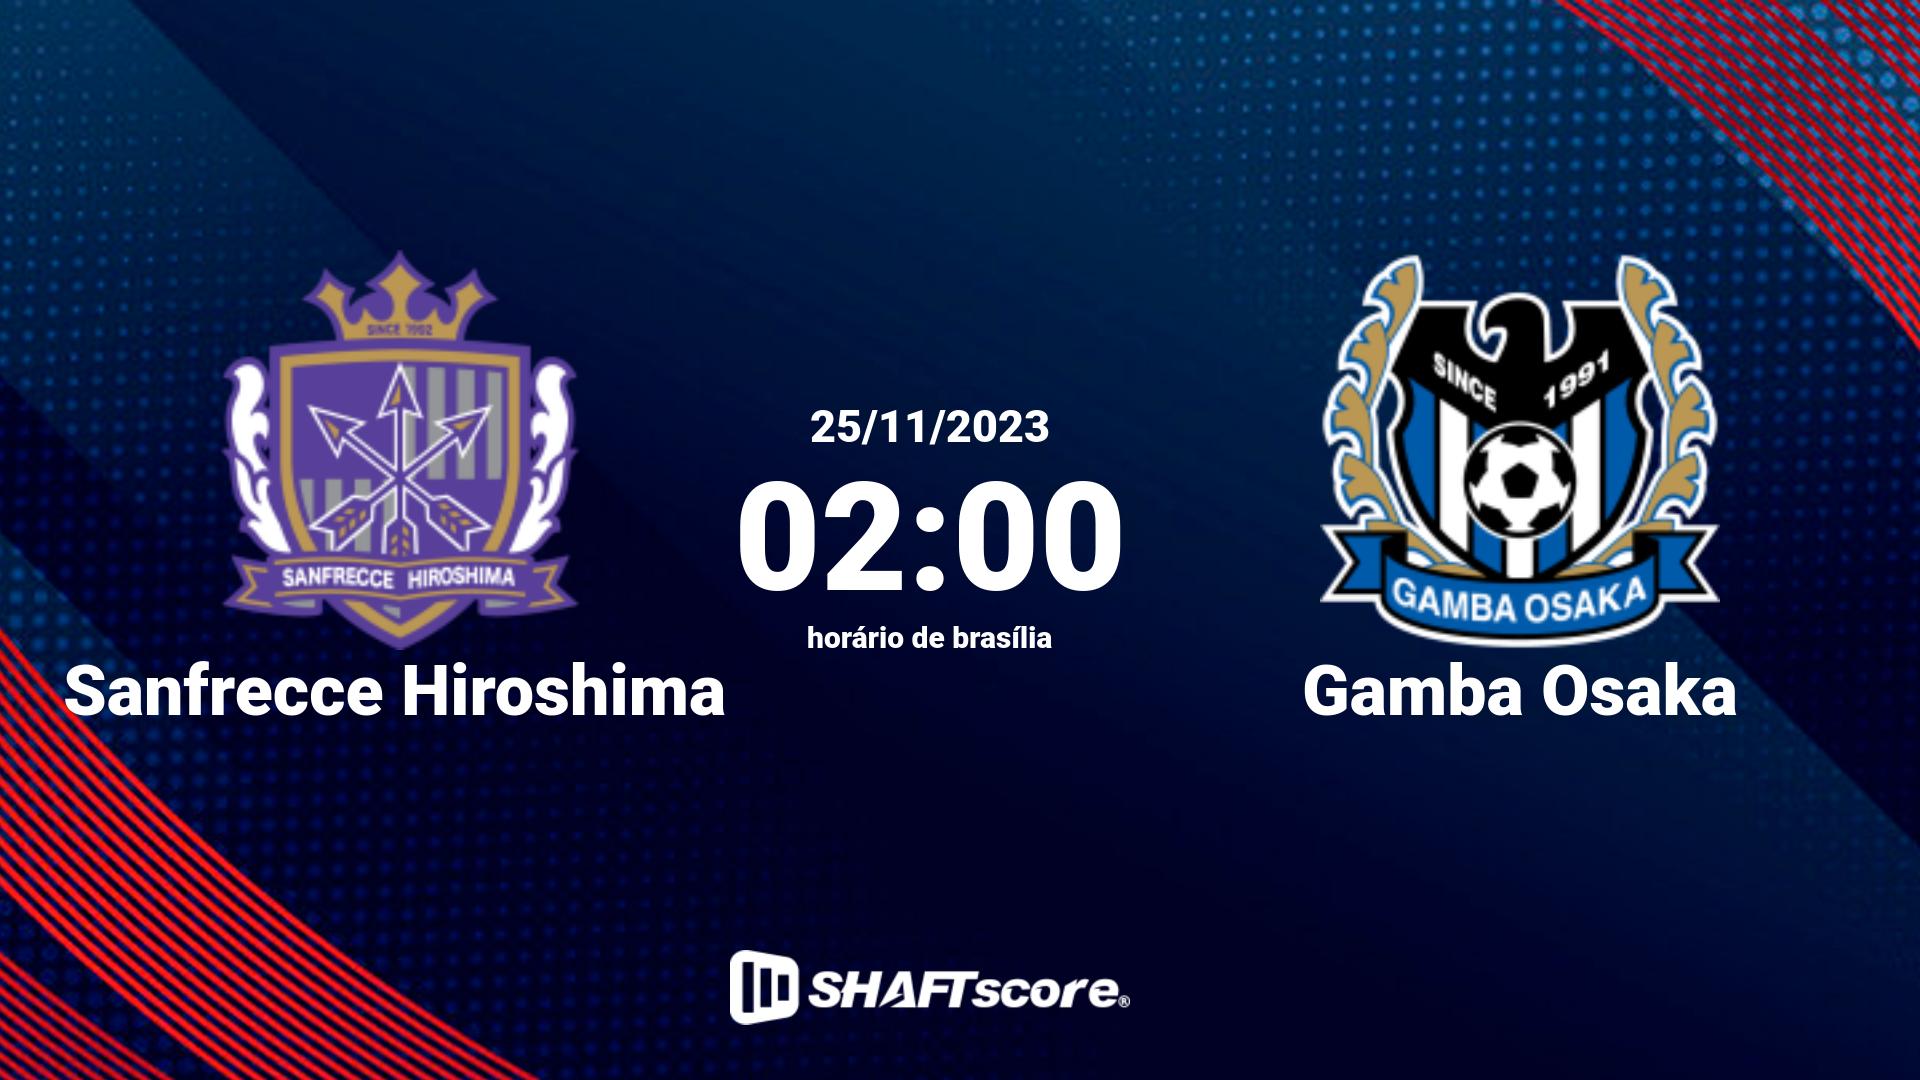 Estatísticas do jogo Sanfrecce Hiroshima vs Gamba Osaka 25.11 02:00